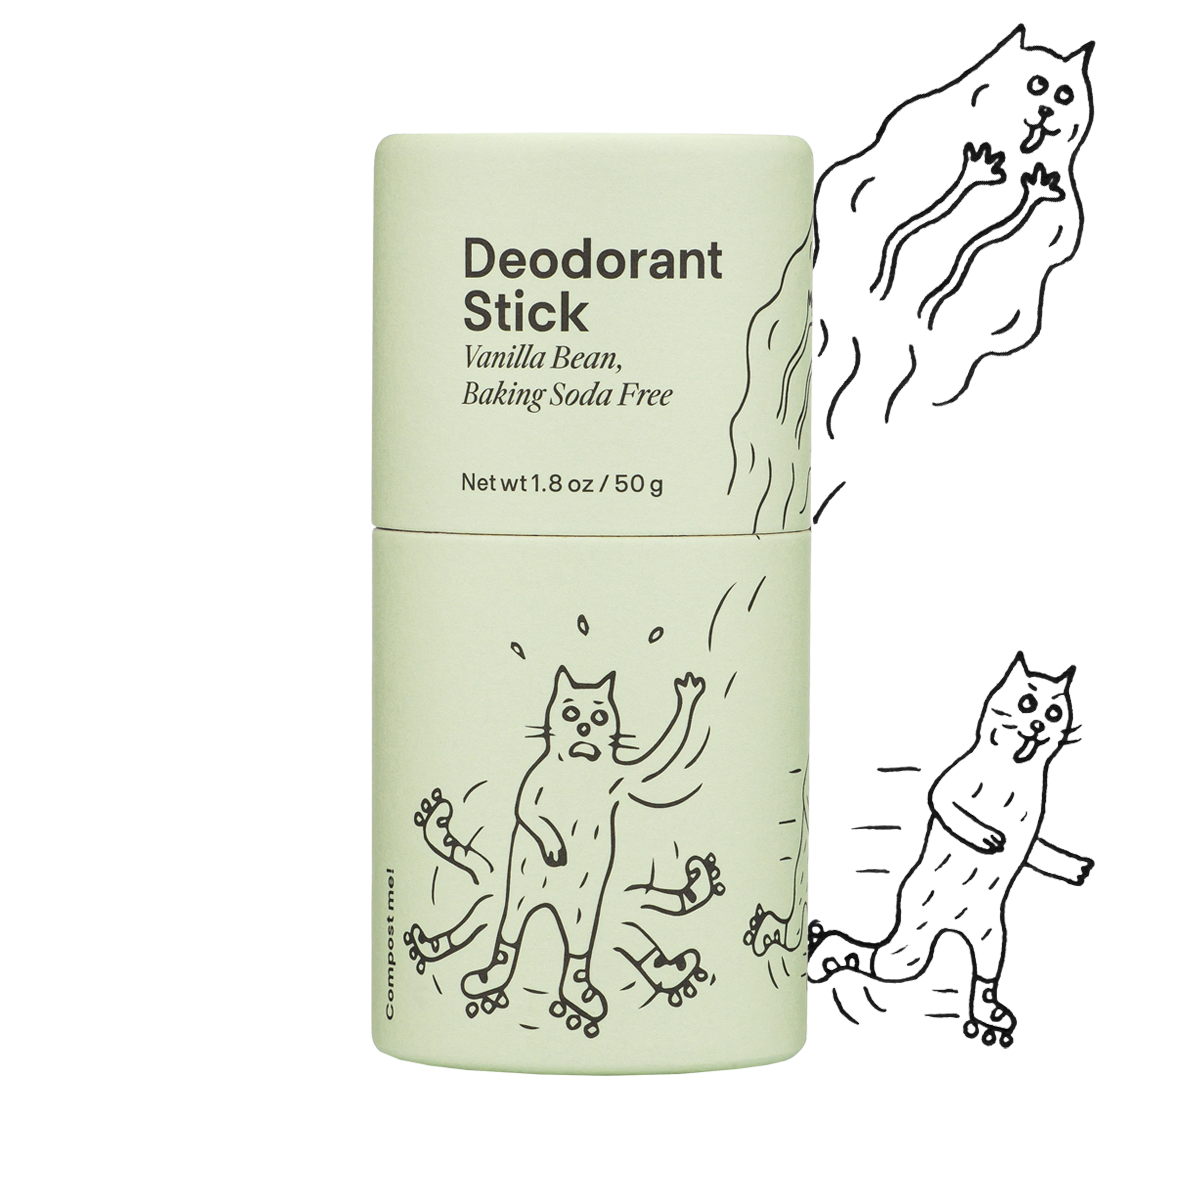 Deodorant Stick - Vanilla Bean